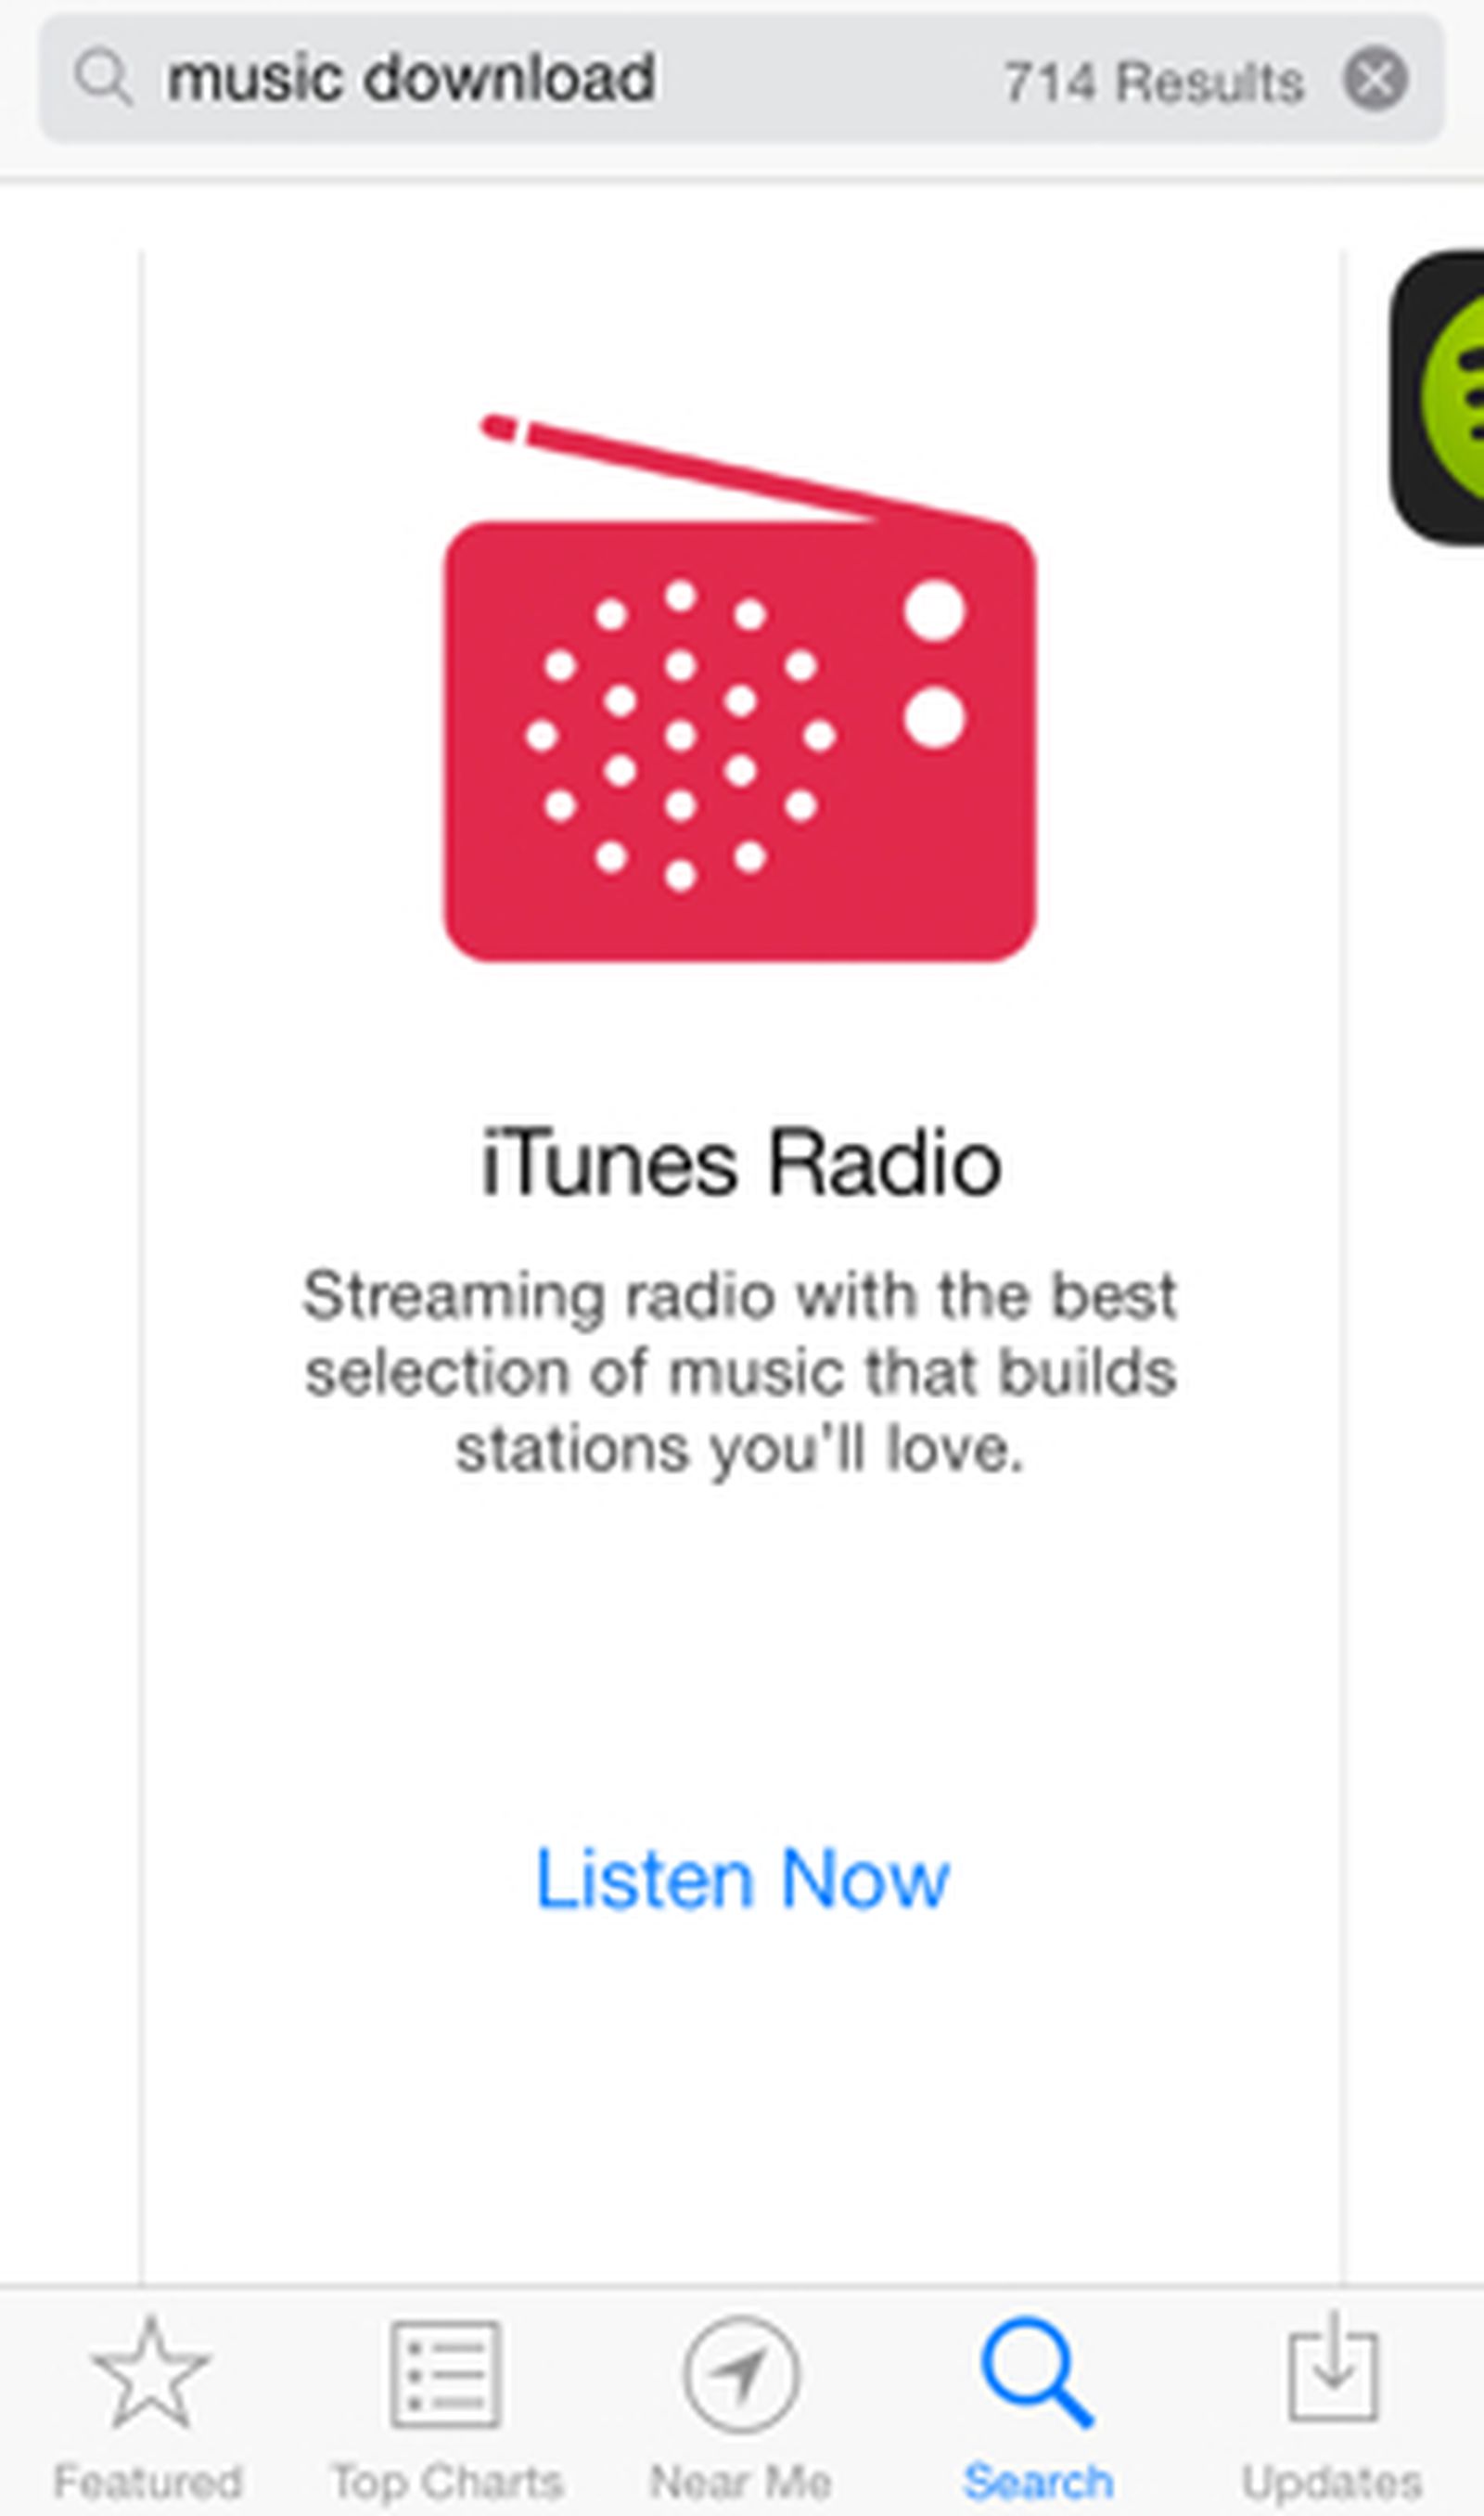 Radios Brasil on the App Store